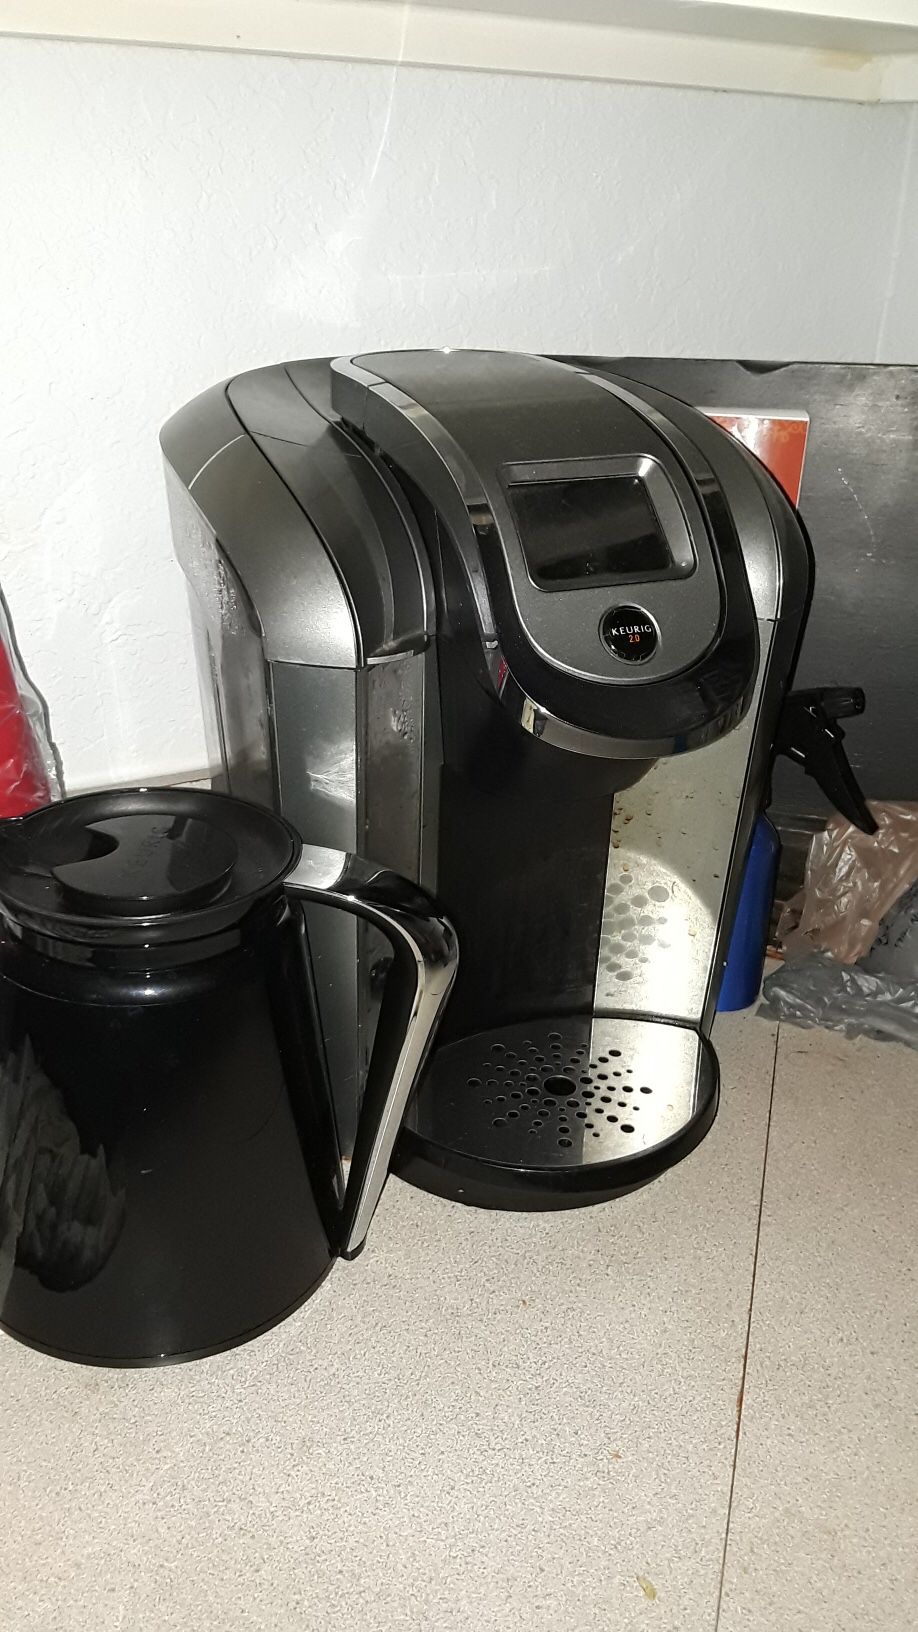 Keurig coffee maker 2.0 with carafe